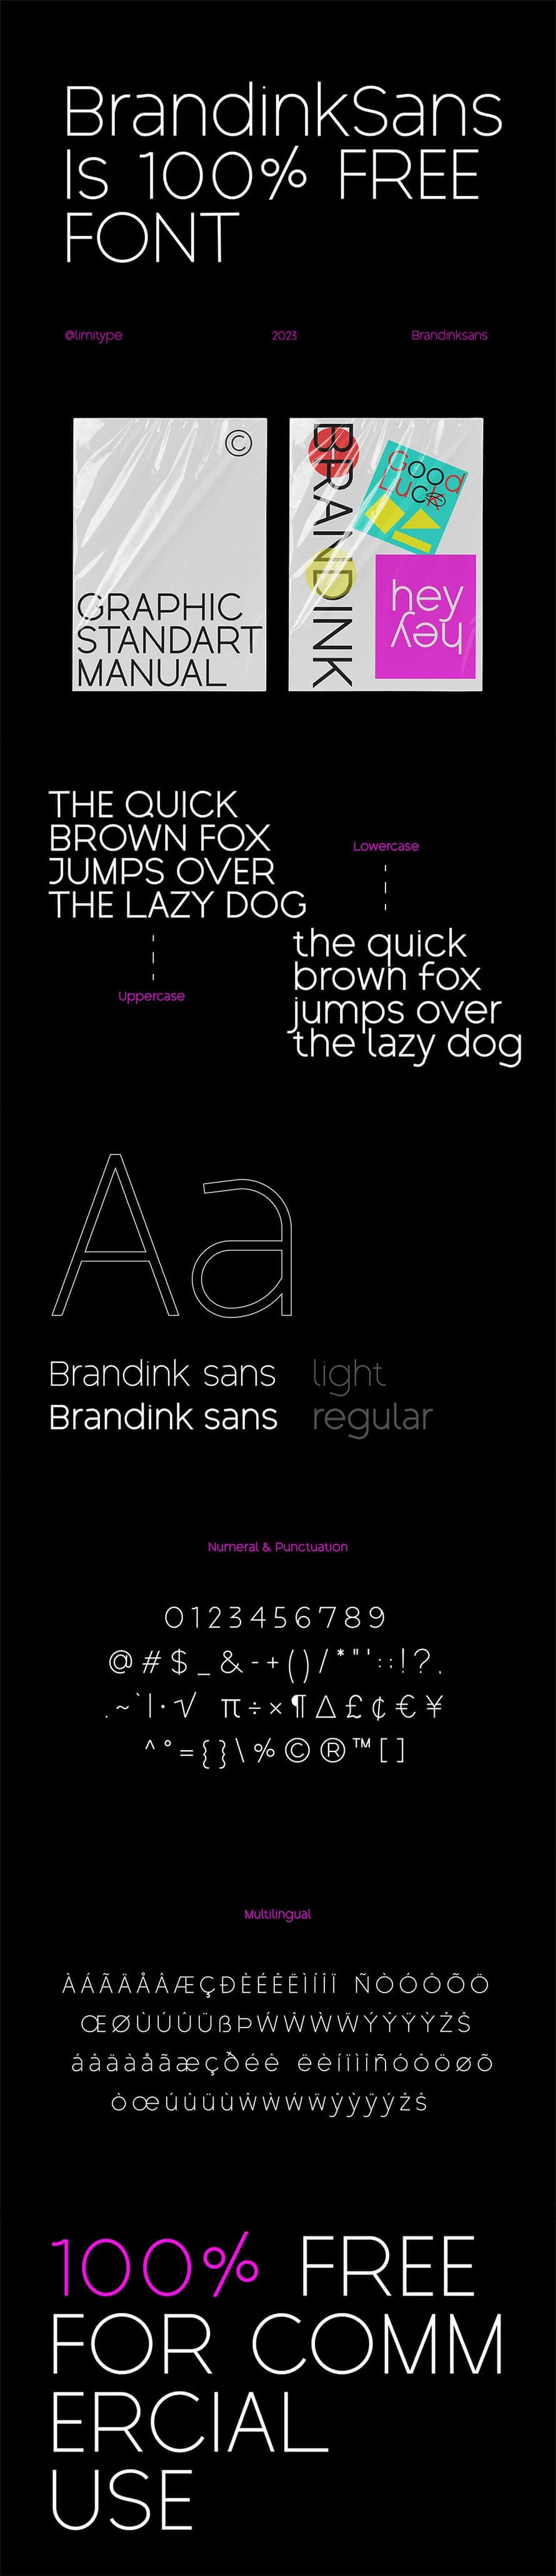 Brandink Sans Free Font